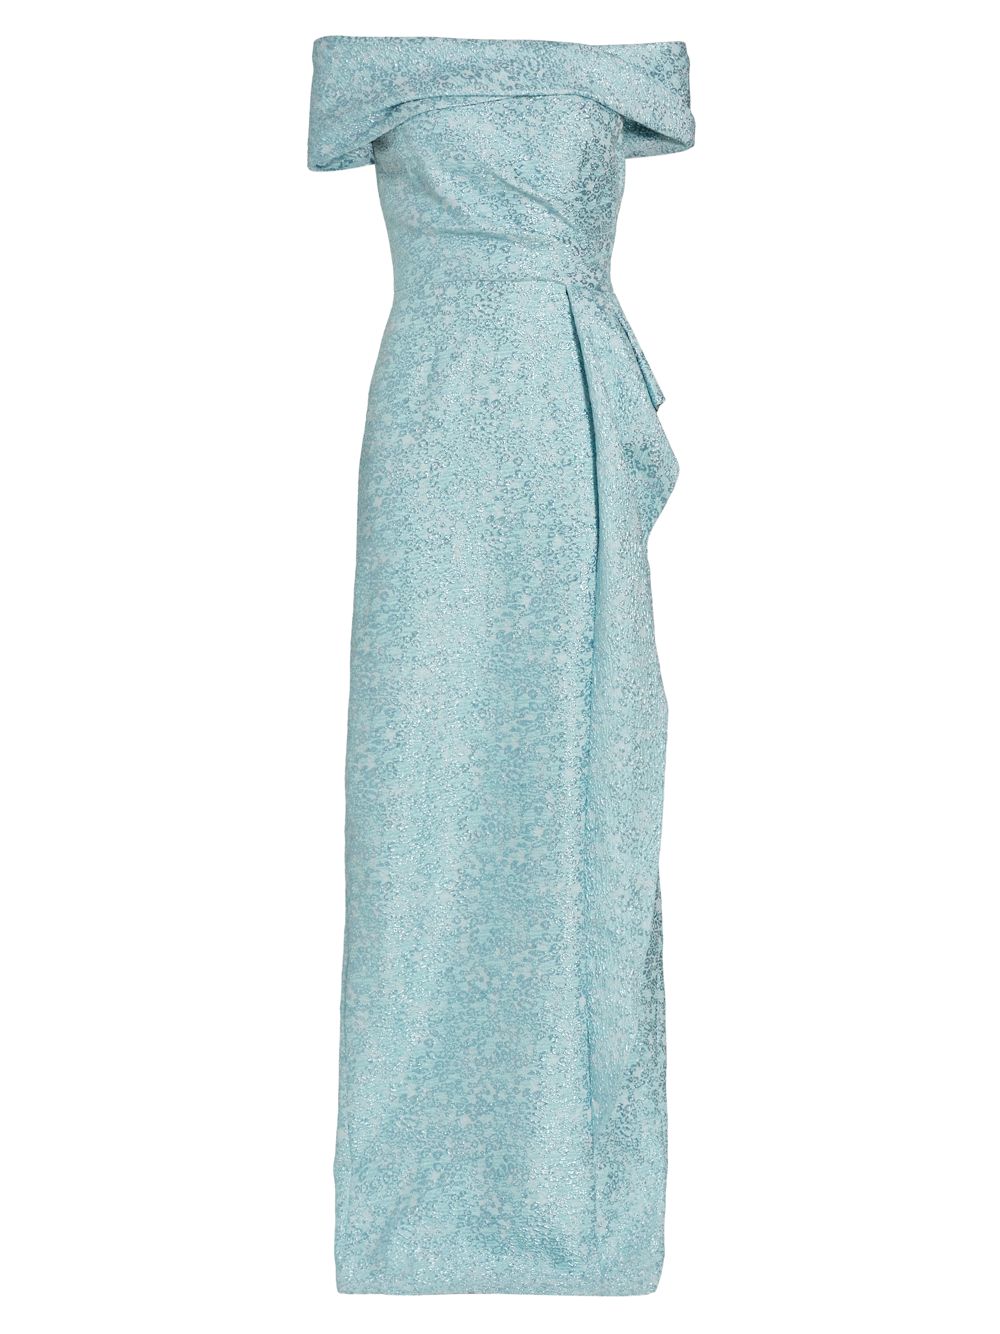 Жаккардовое платье с открытыми плечами Teri Jon by Rickie Freeman, синий